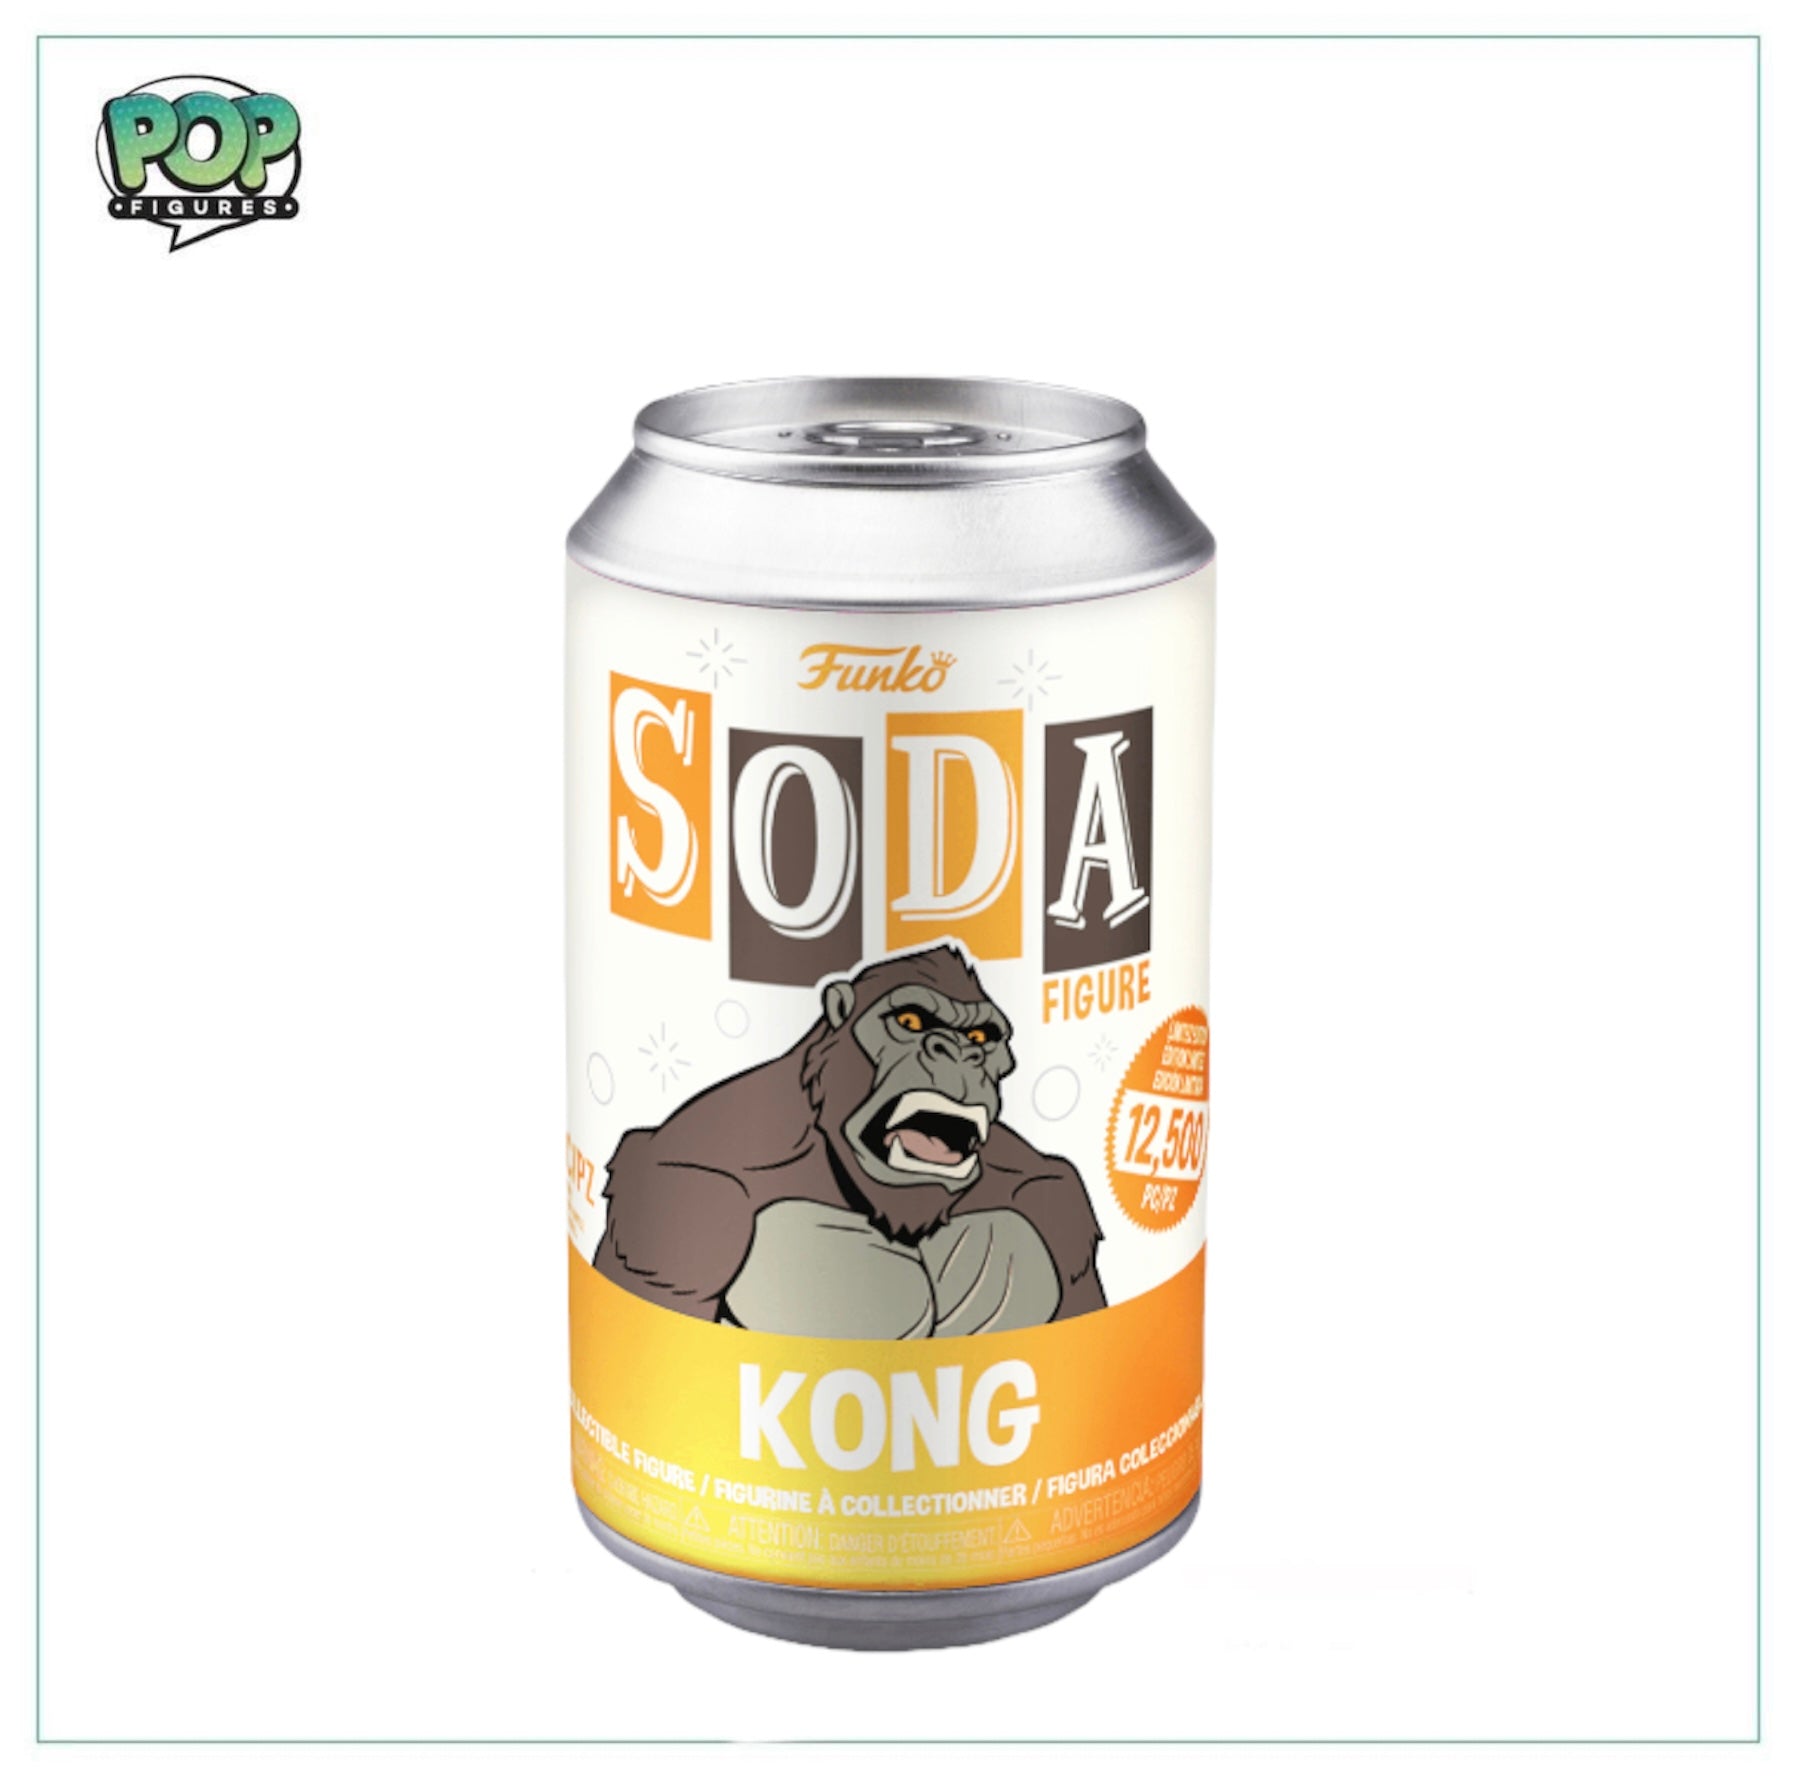 Kong Funko Soda Vinyl Figure! - Godzilla vs Kong - LE12500 Pcs - Chance Of Chase